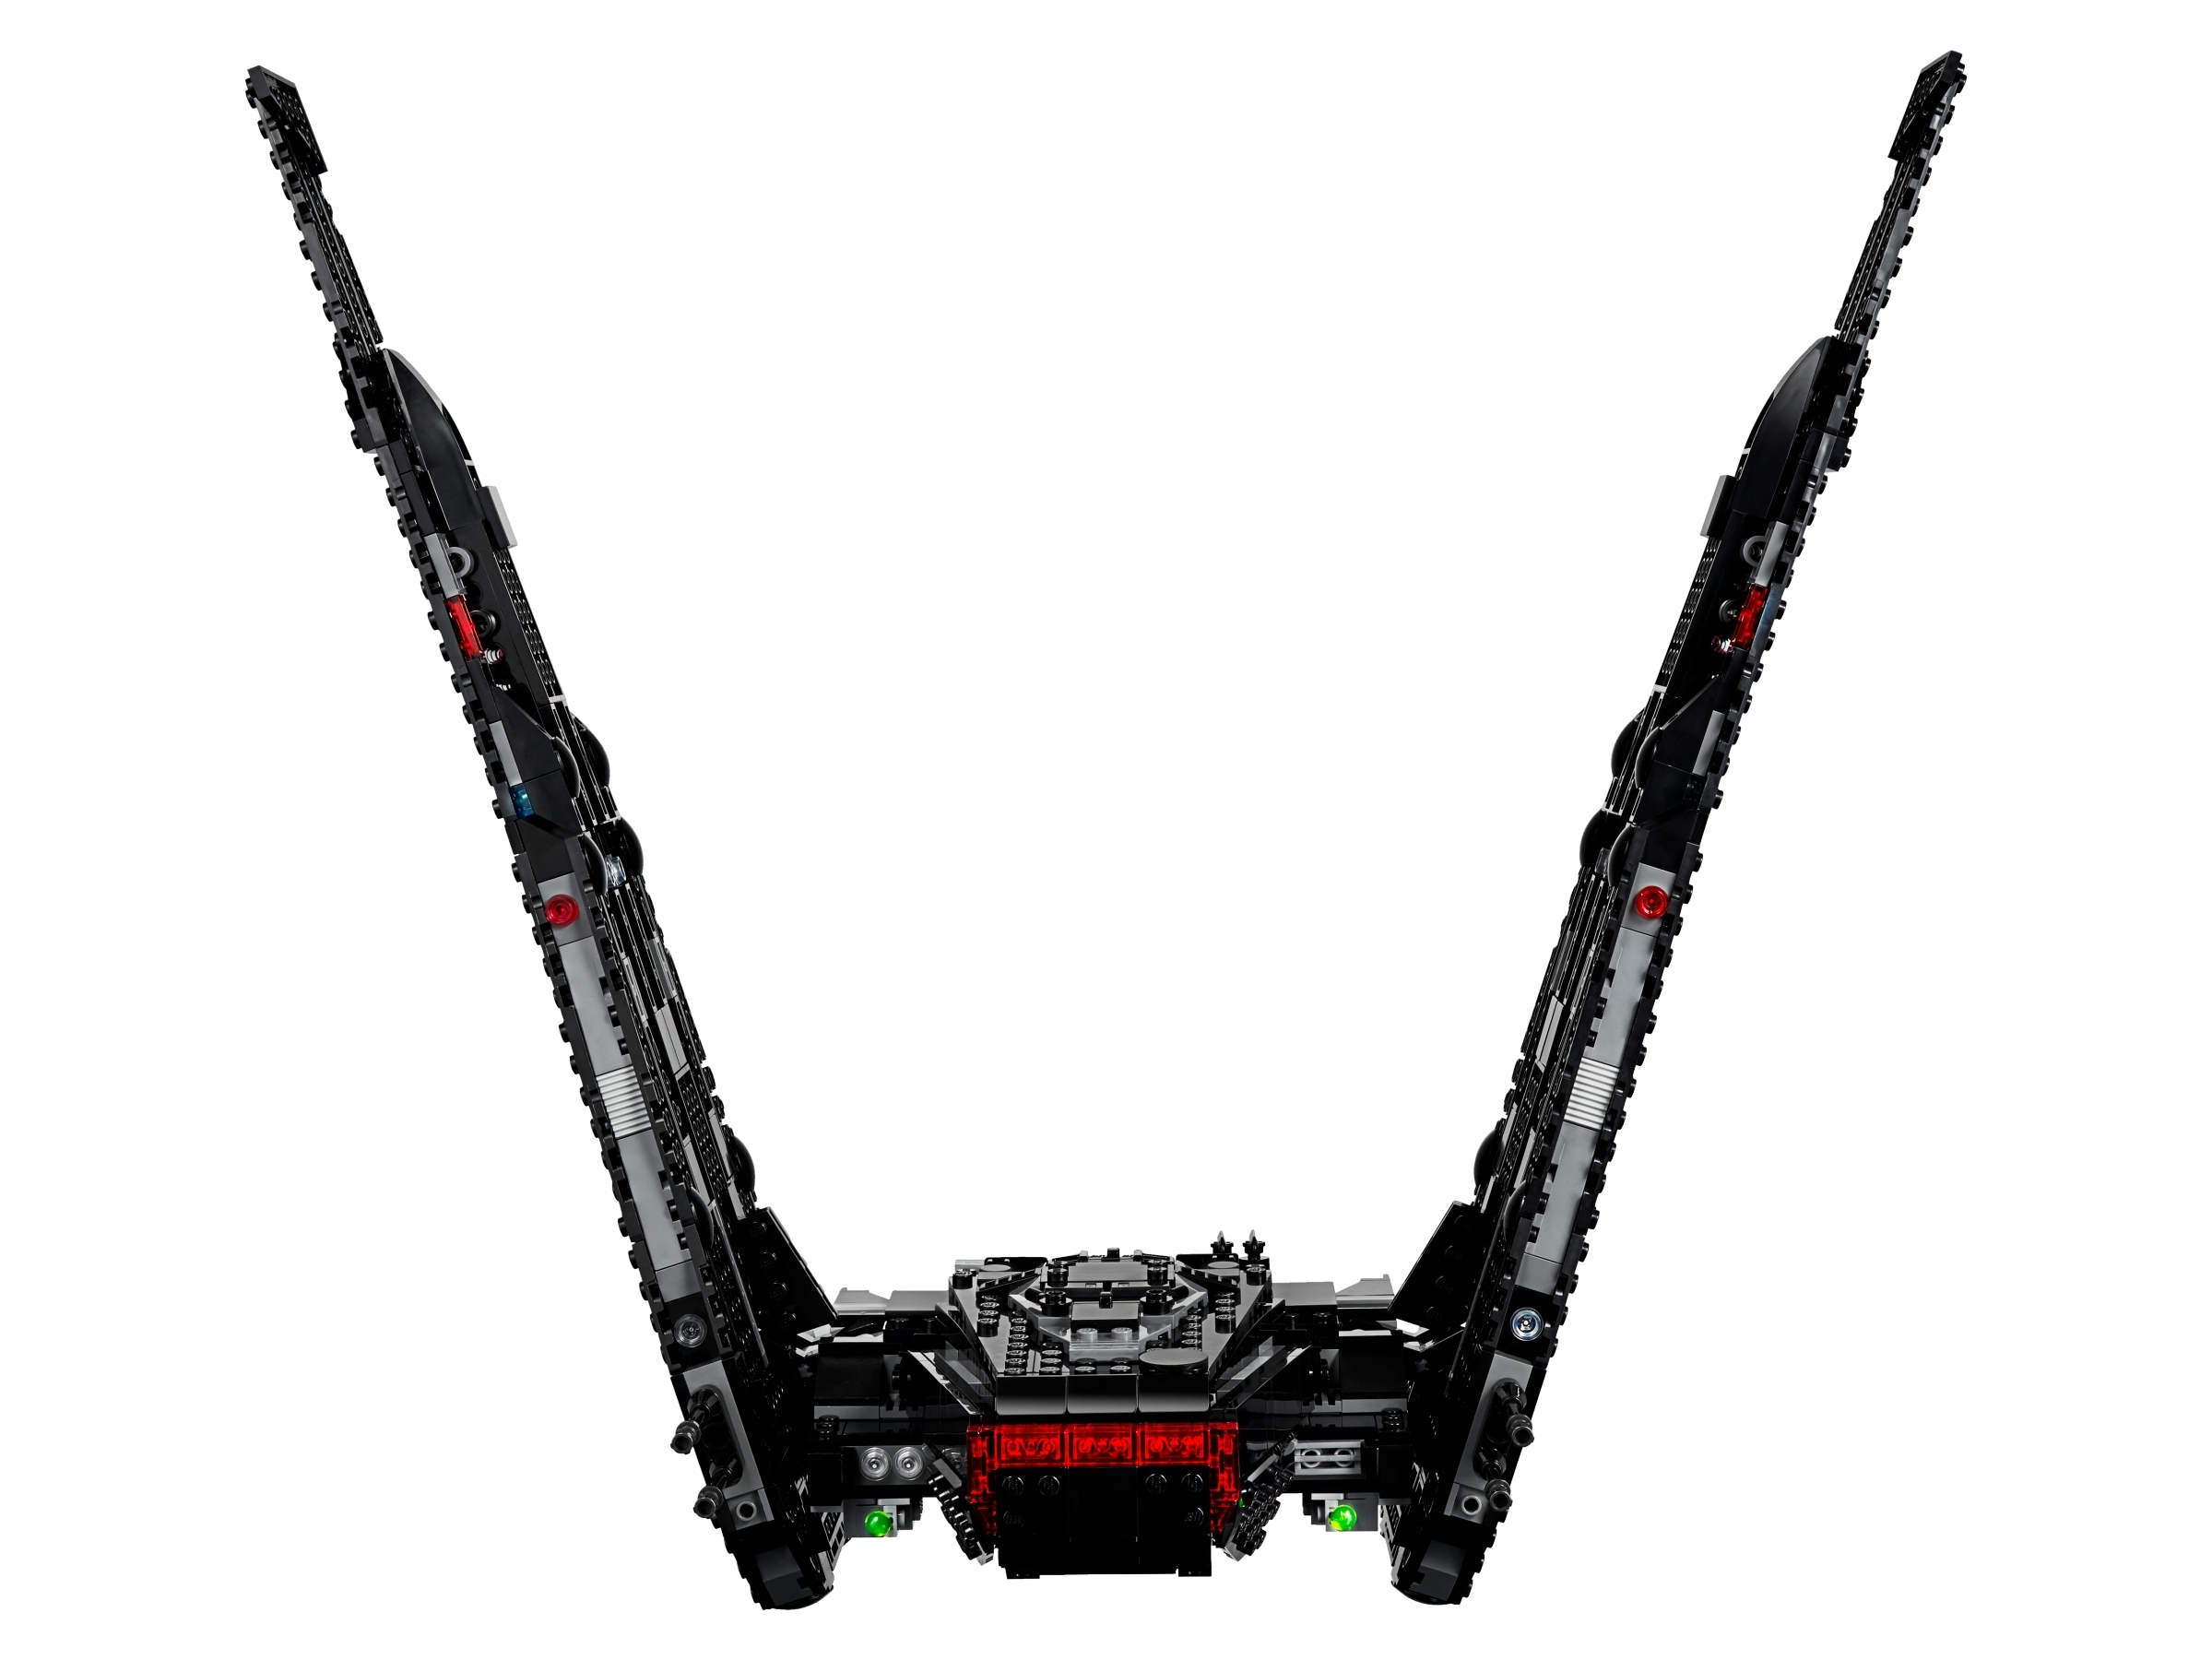 Ren's Shuttle™ | Star Wars™ | Buy online at LEGO® Shop US